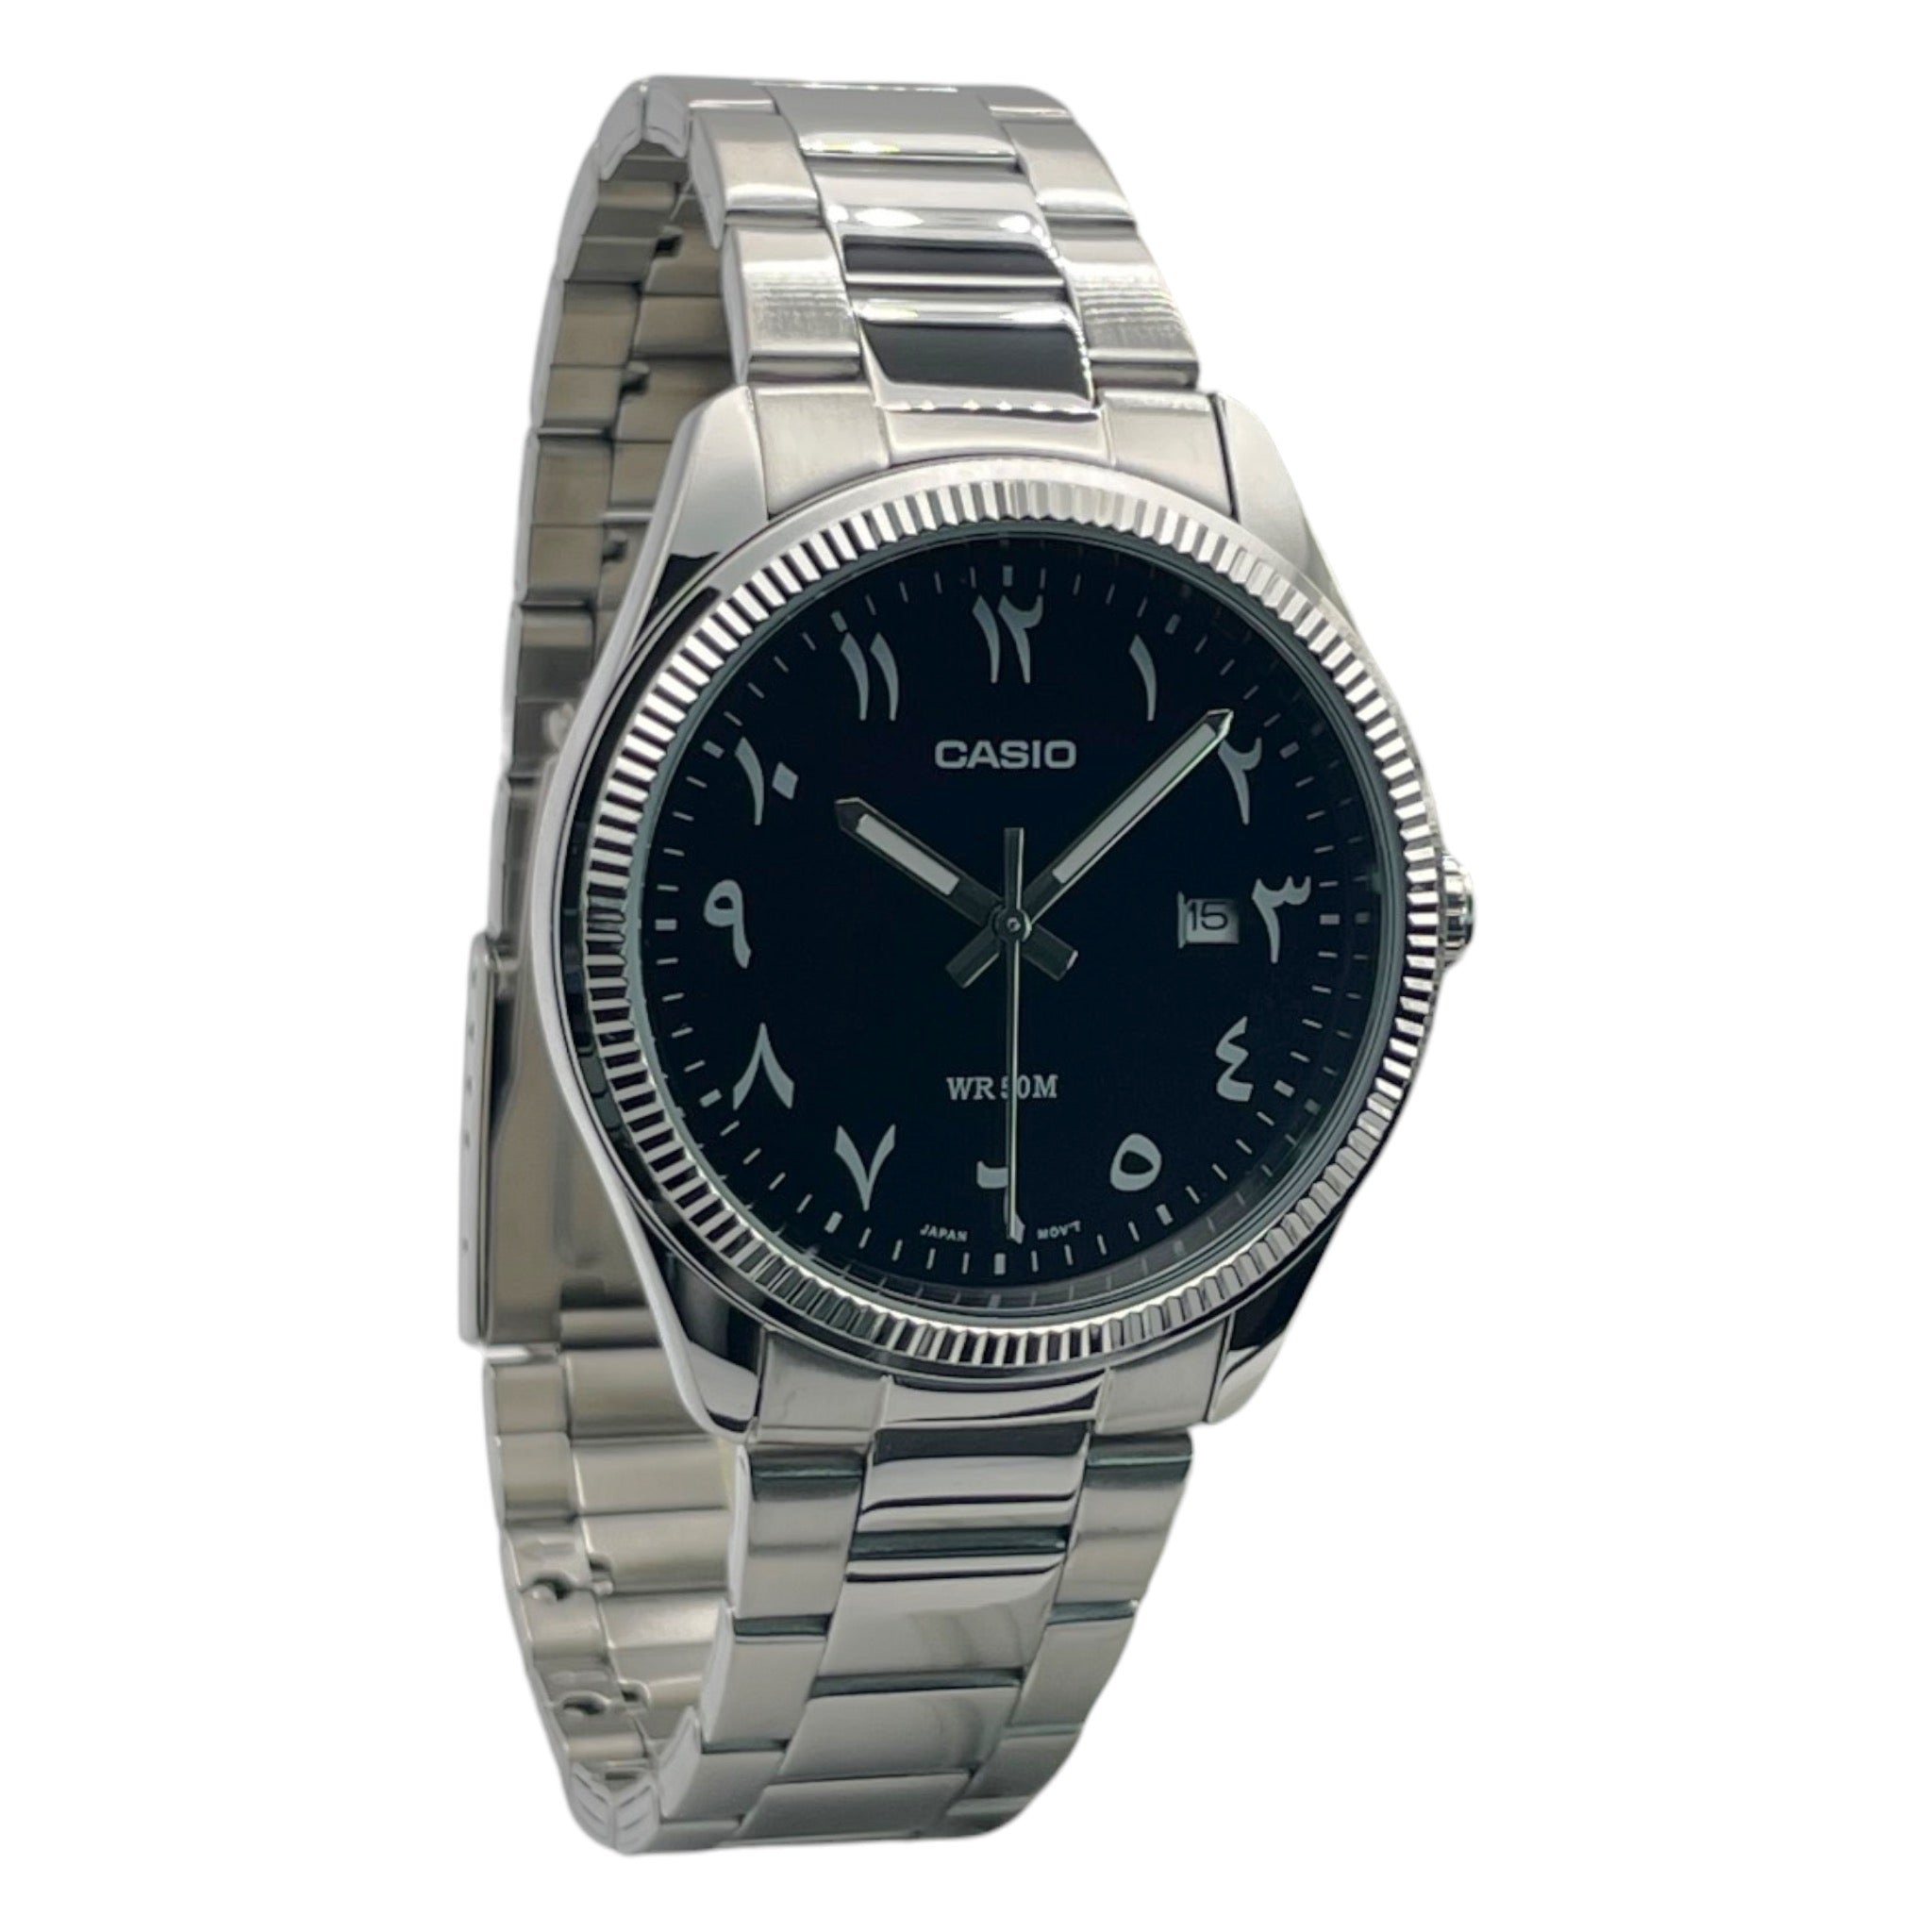 Casio Arabic Dial Men's Watch MTP-1302D-1B3 Black